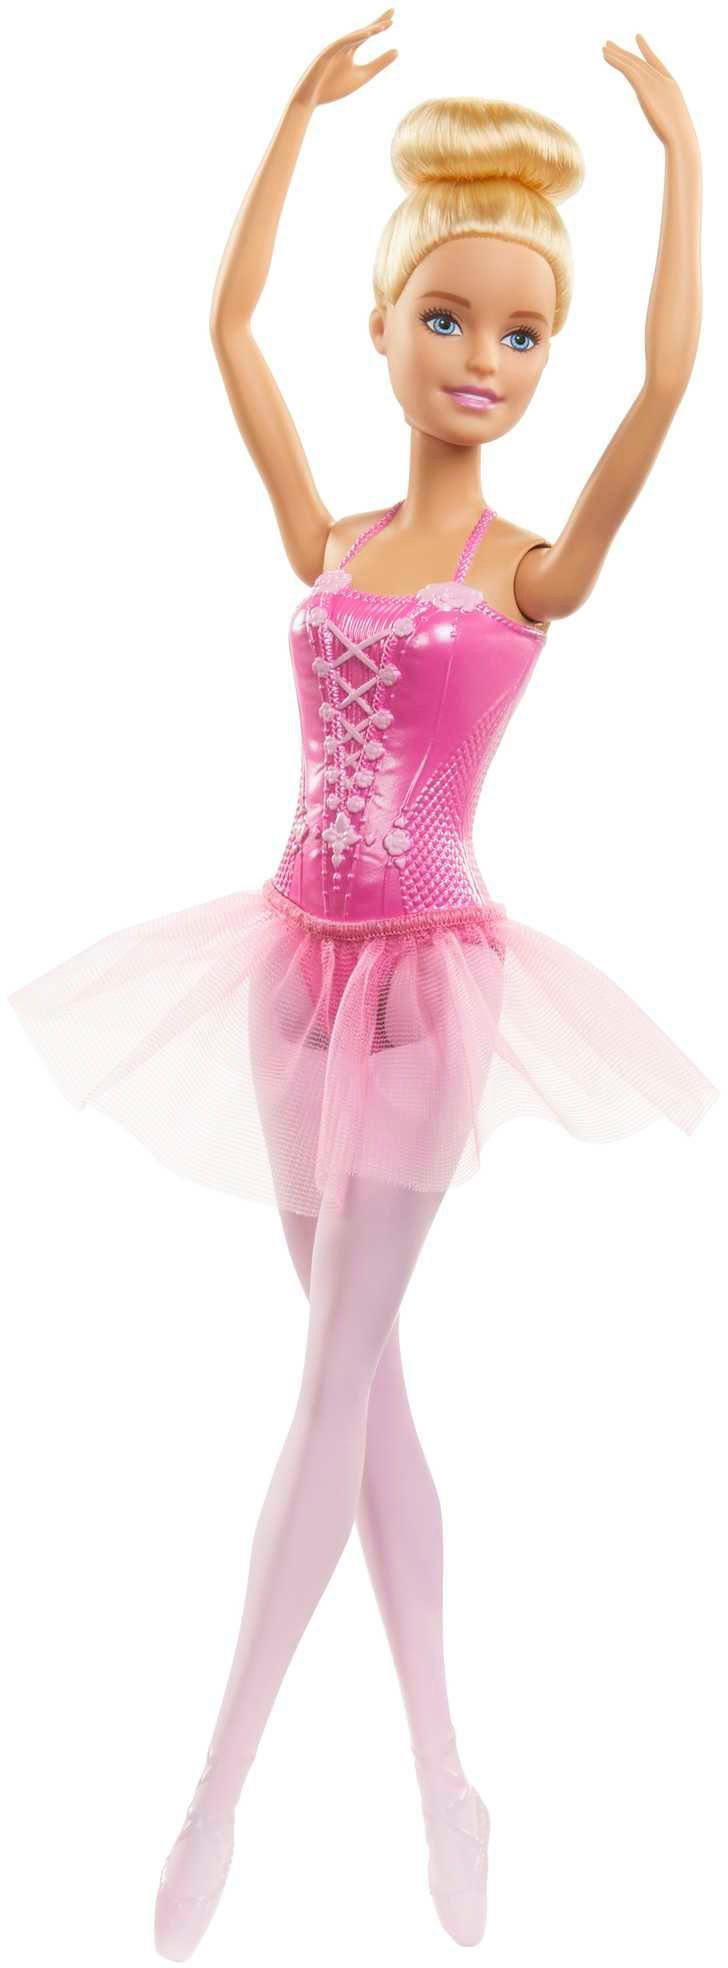 (blond) Barbie Ballerina-Puppe Anziehpuppe